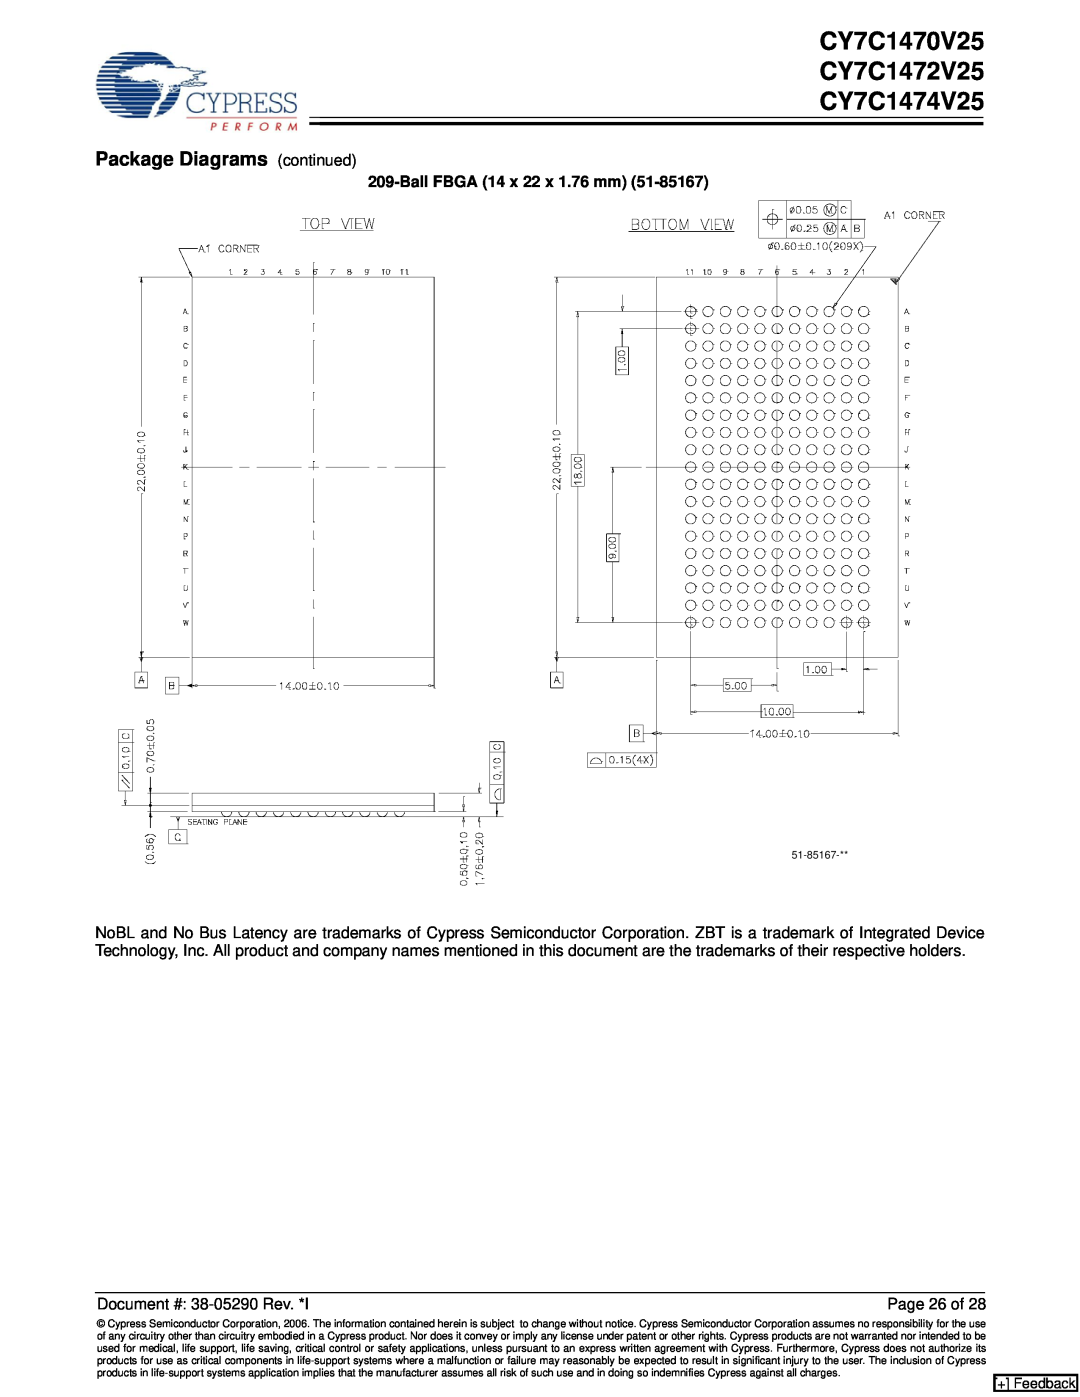 Cypress manual Package Diagrams continued, CY7C1470V25 CY7C1472V25 CY7C1474V25, Ball FBGA 14 x 22 x 1.76 mm, + Feedback 